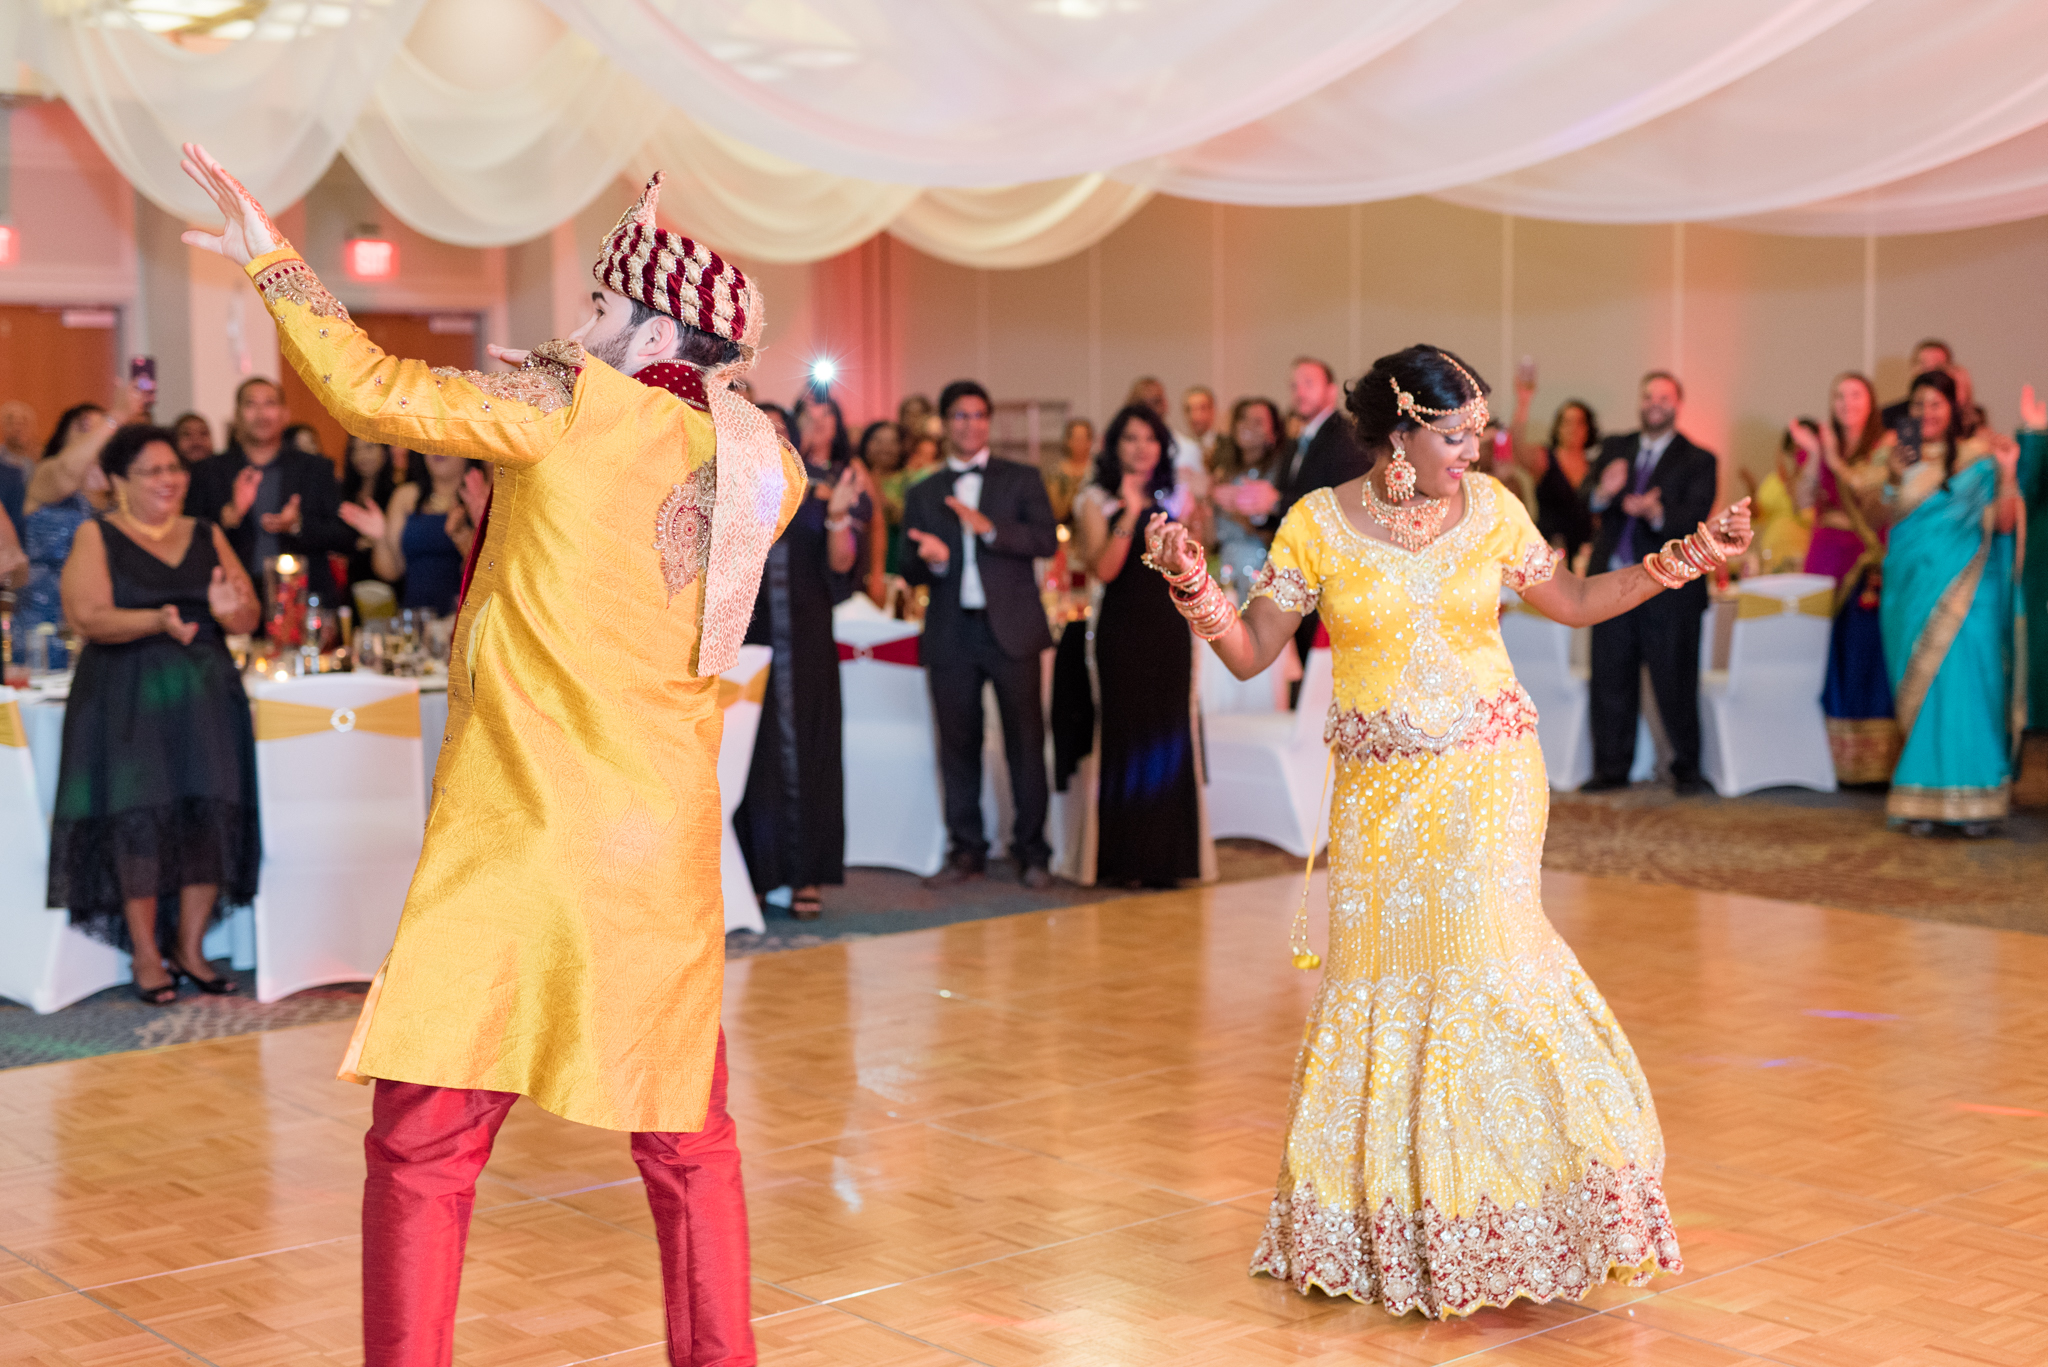 Bride and groom dance at wedding reception.